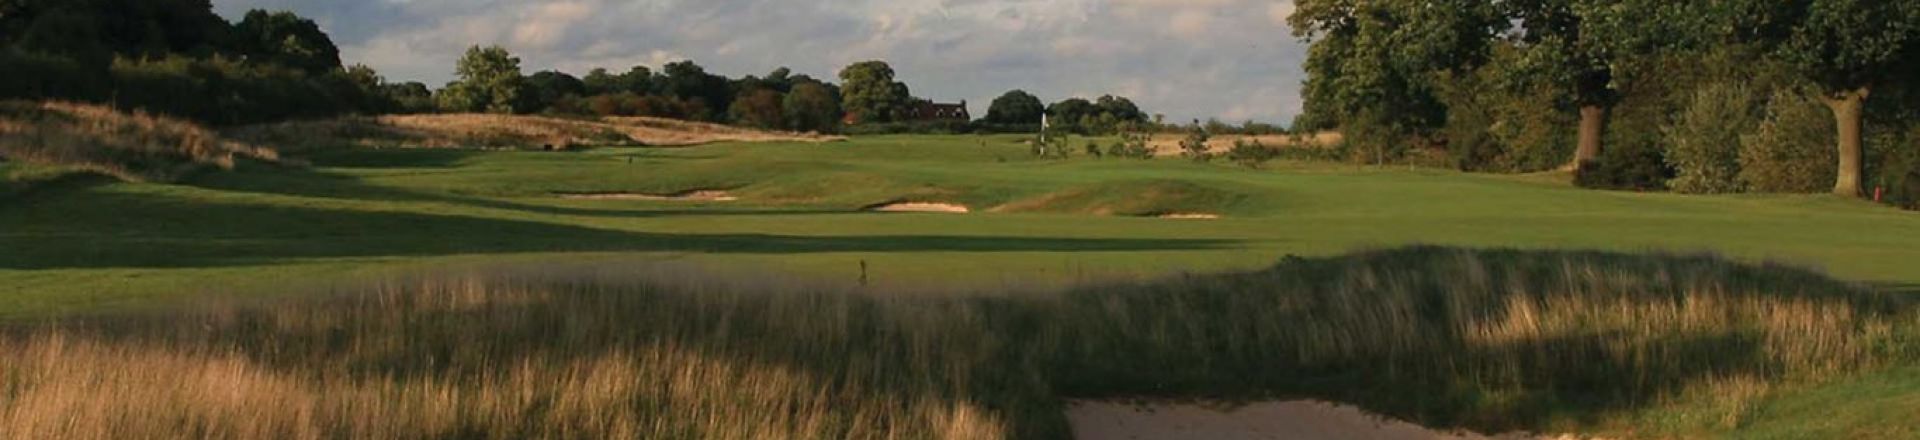 The Bracken Course at Woodhall Spa Golf Club